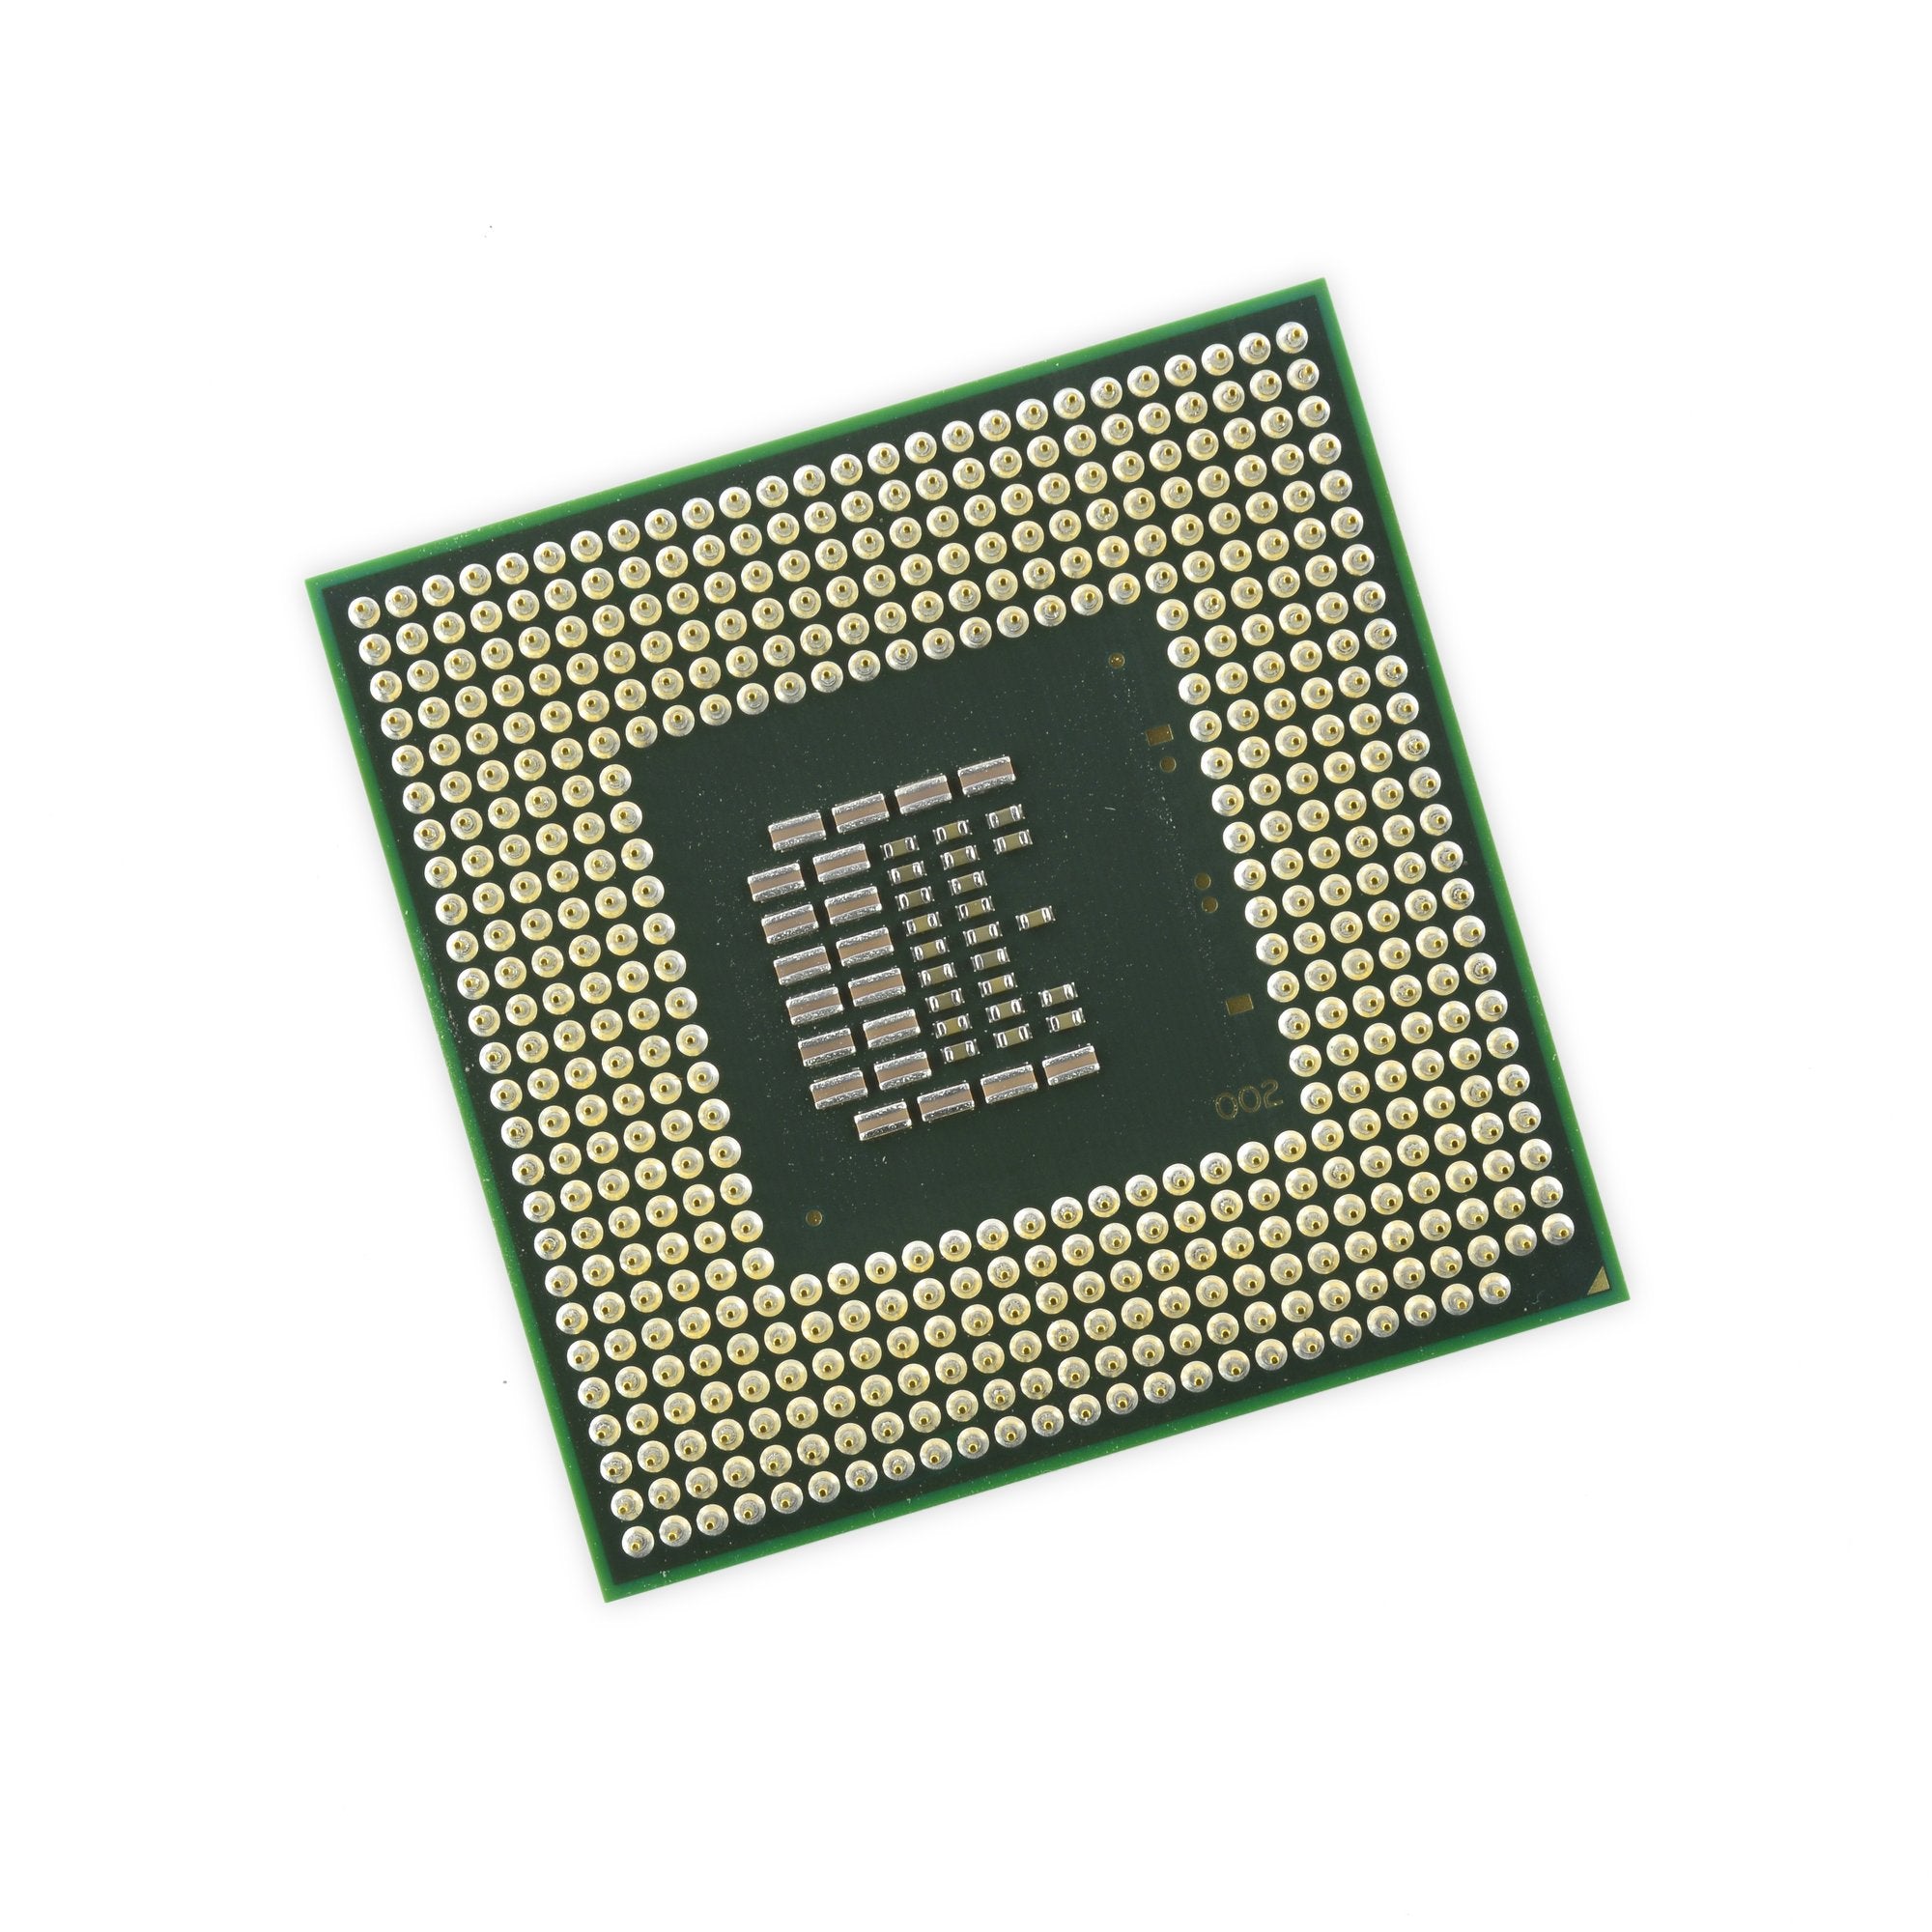 iMac Intel 20" EMC 2133 CPU